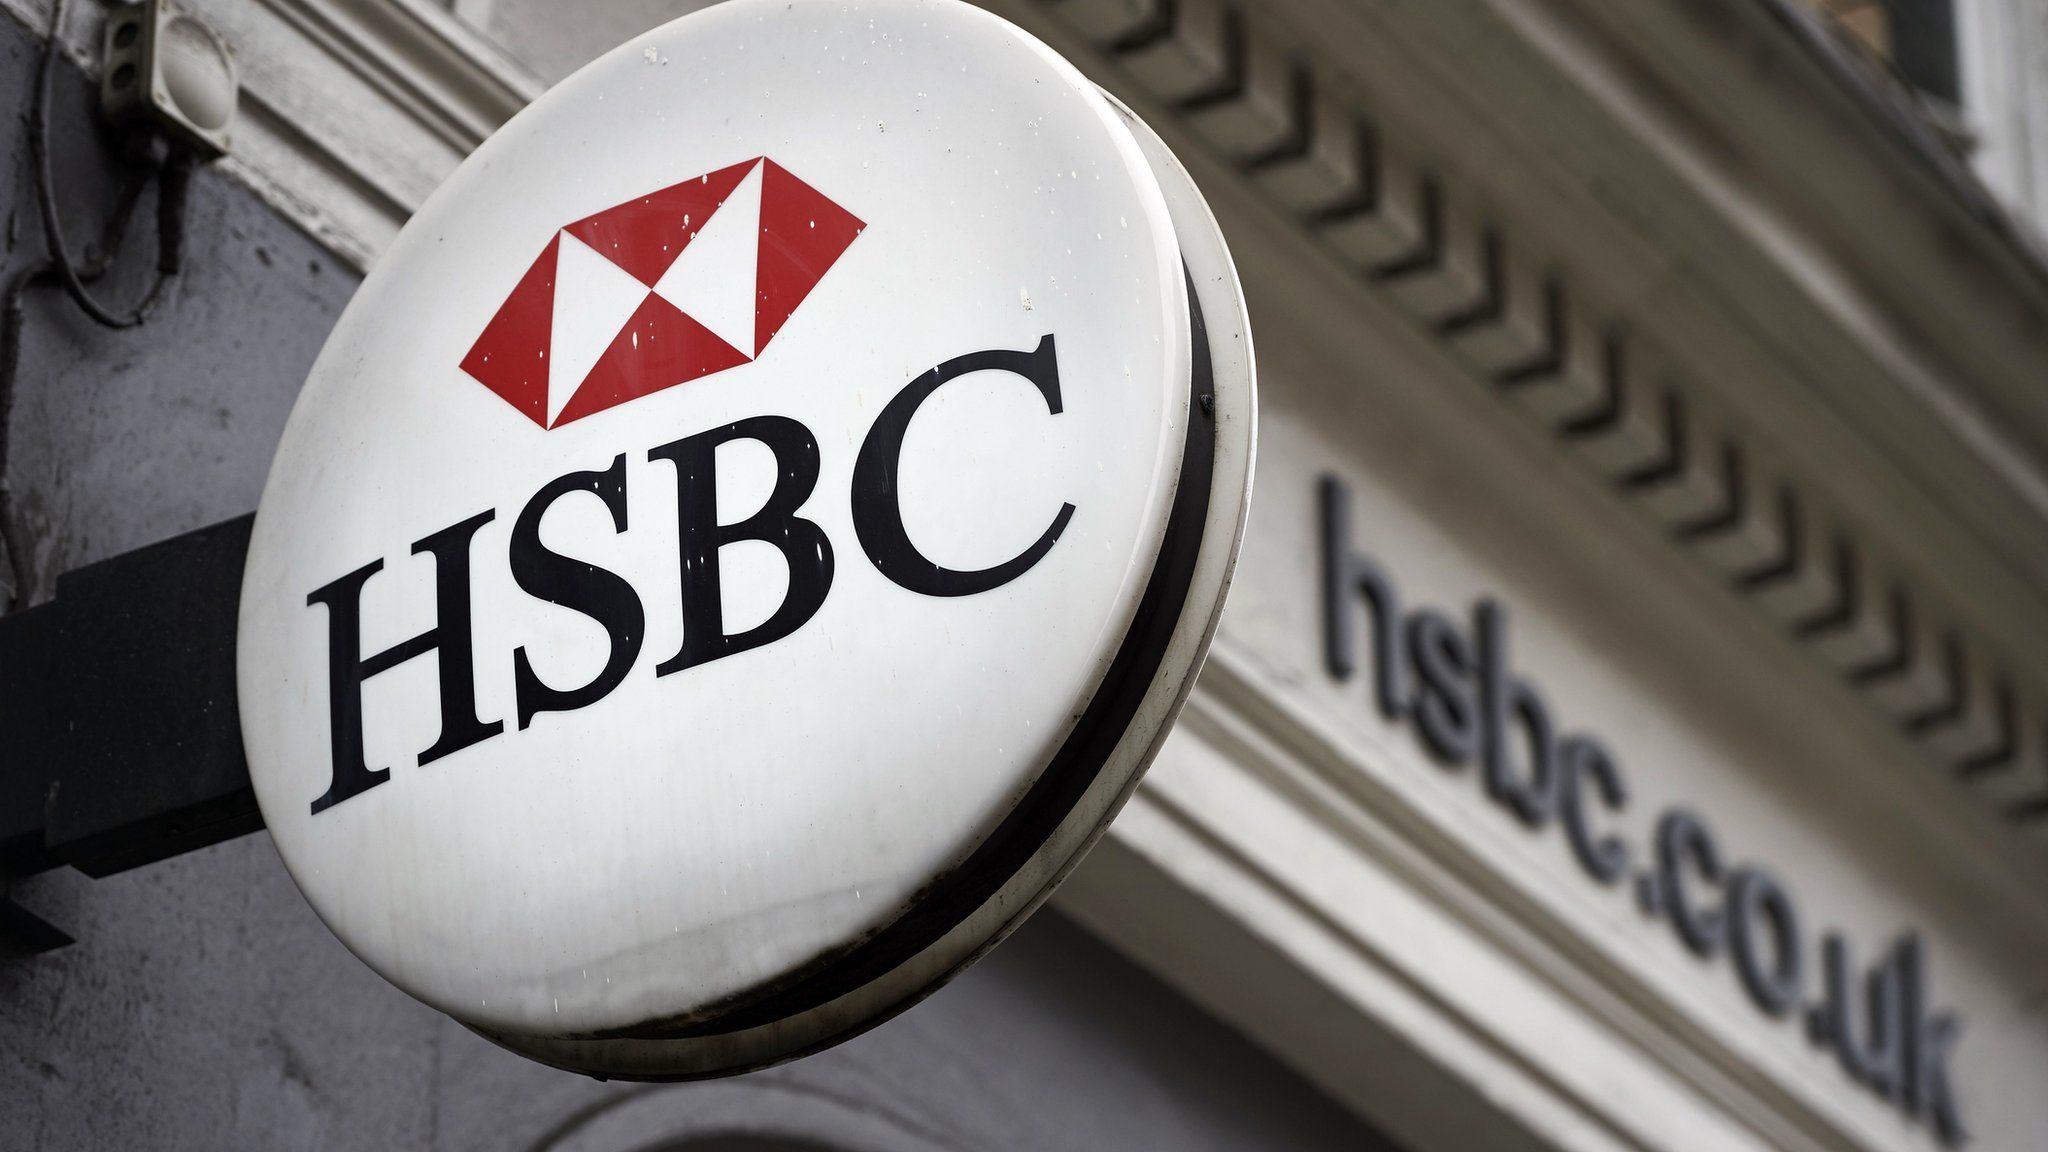 Hsbc To Keep Headquarters In London Bbc News 9099